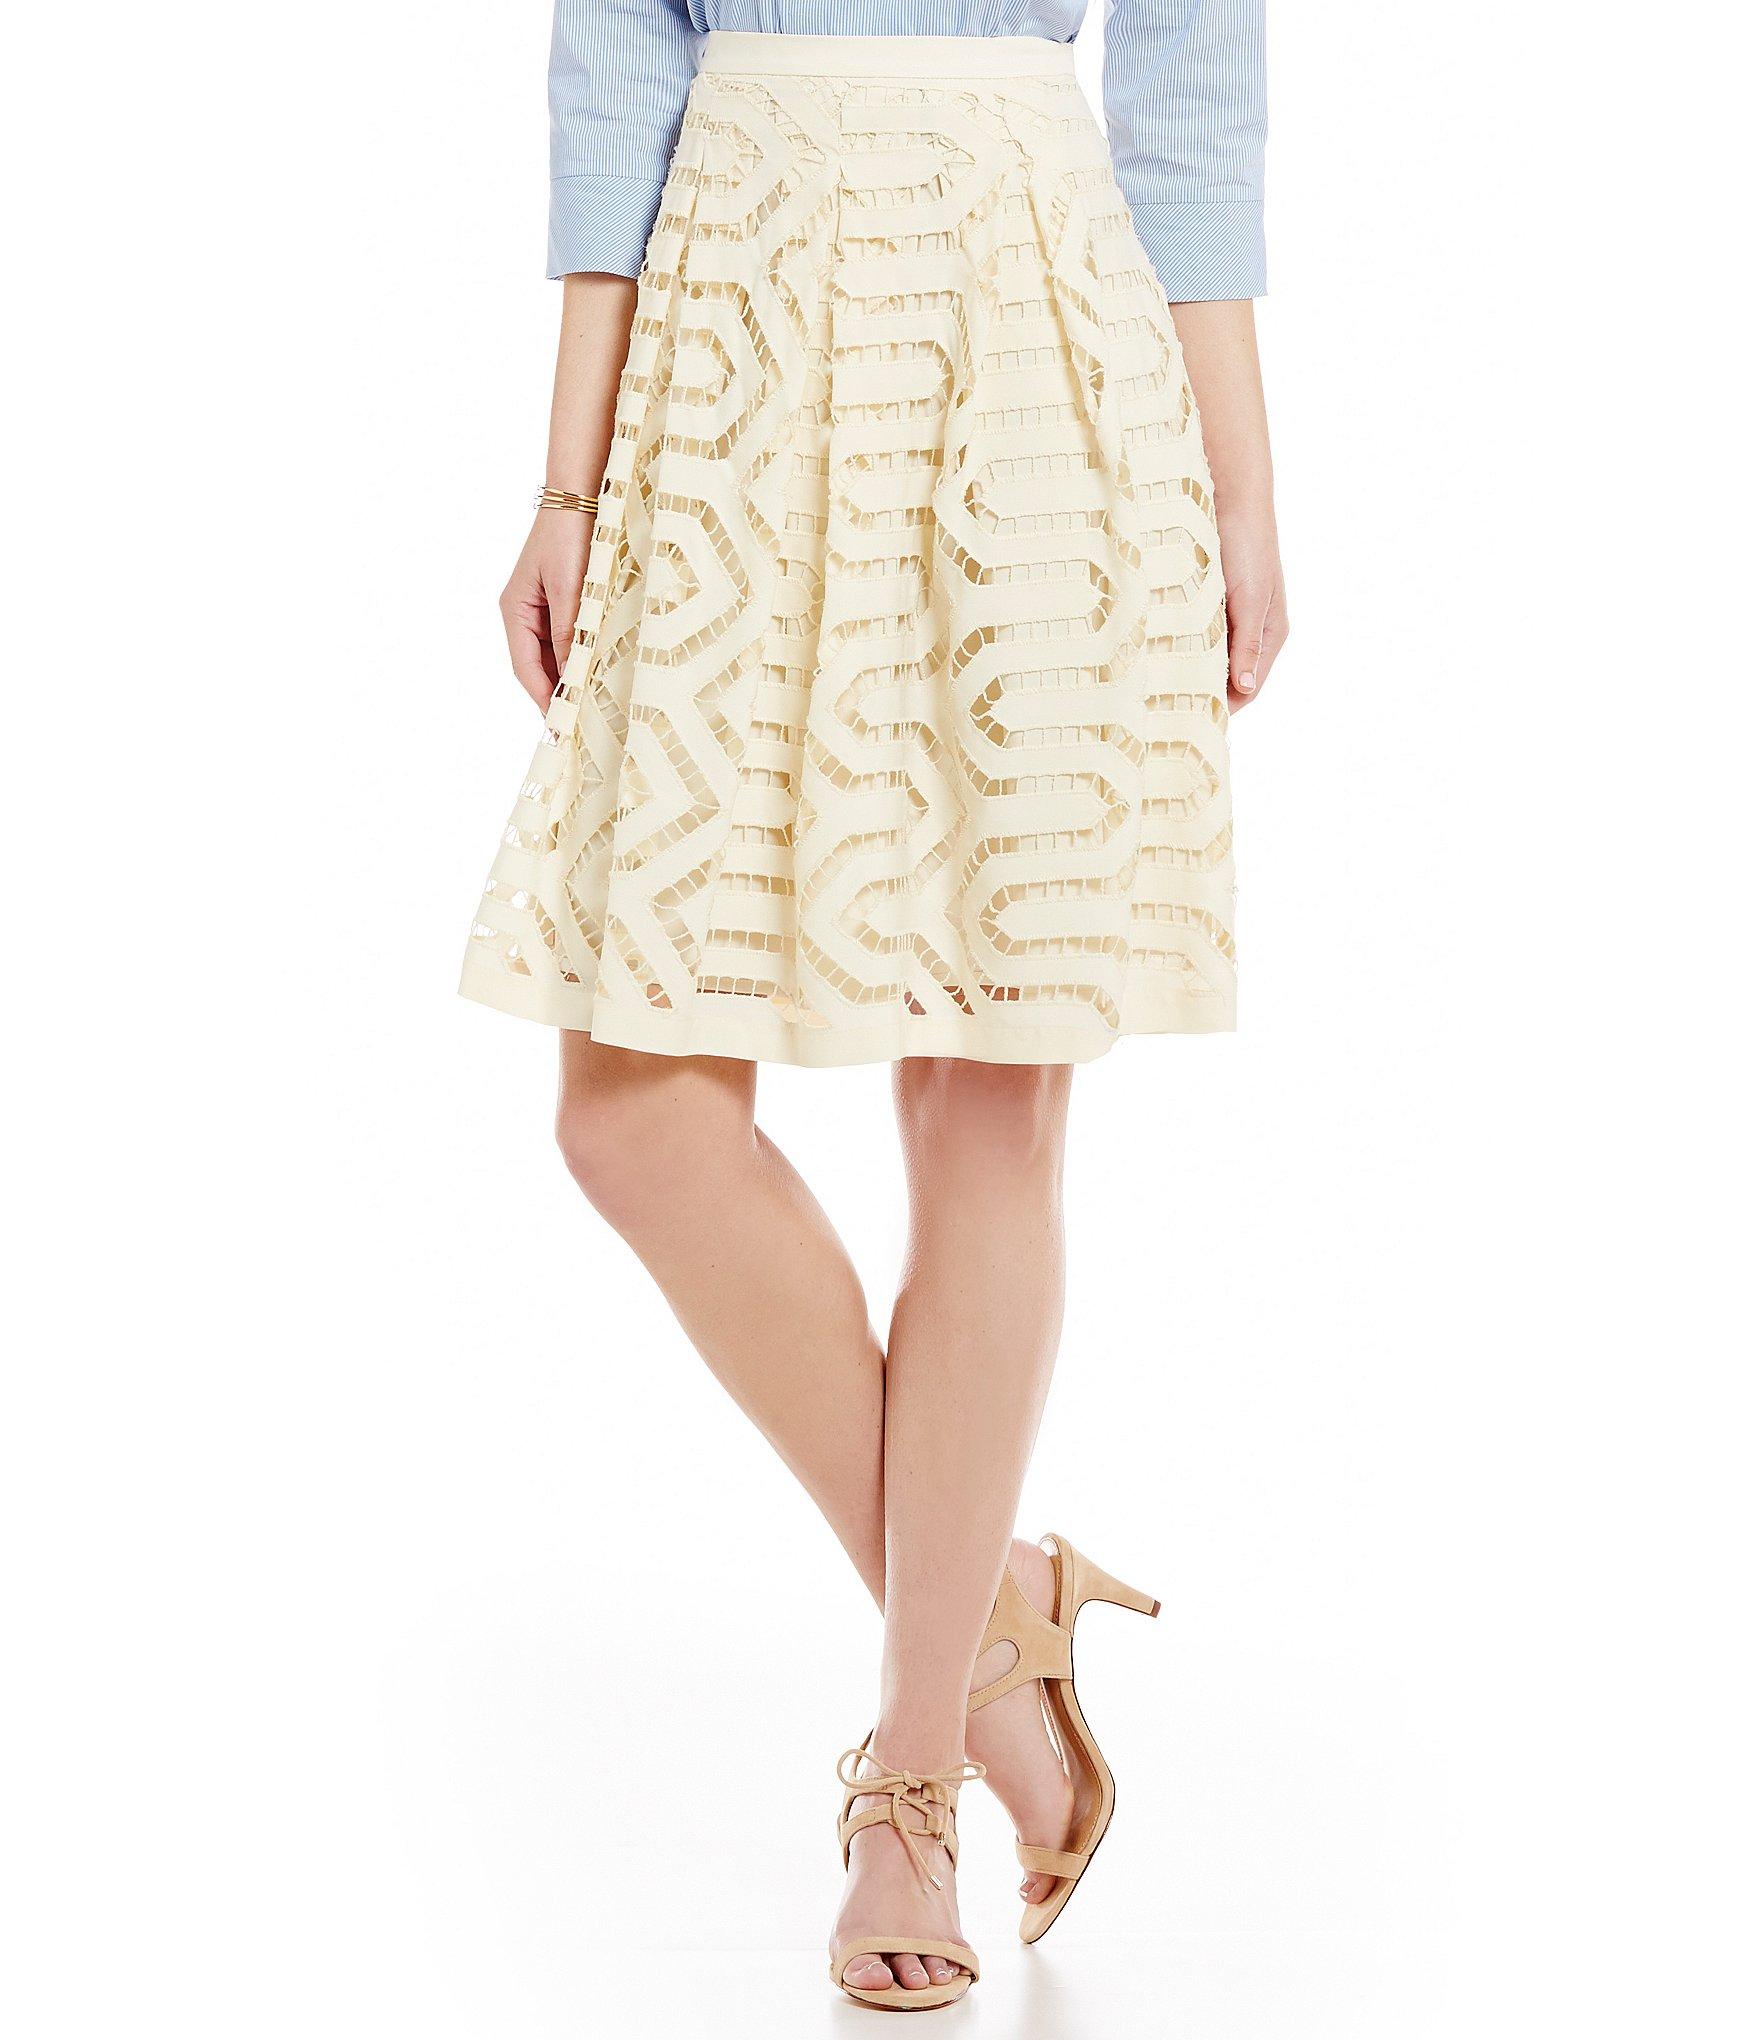 Lyst - Antonio Melani Irina Pleated Geometric Lace A-line Skirt in White